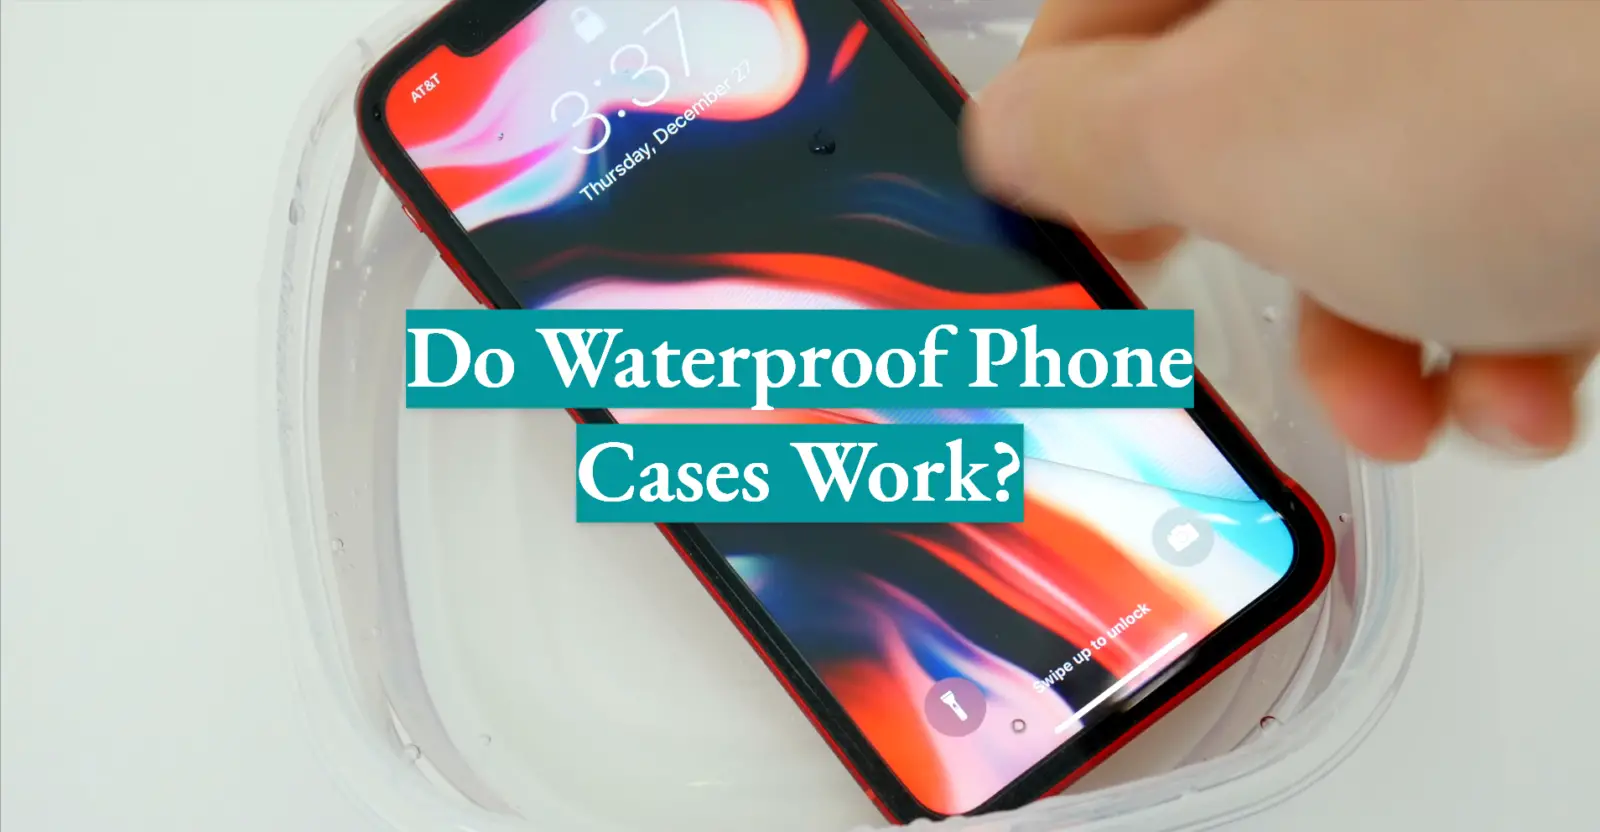 Do Waterproof Phone Cases Work?